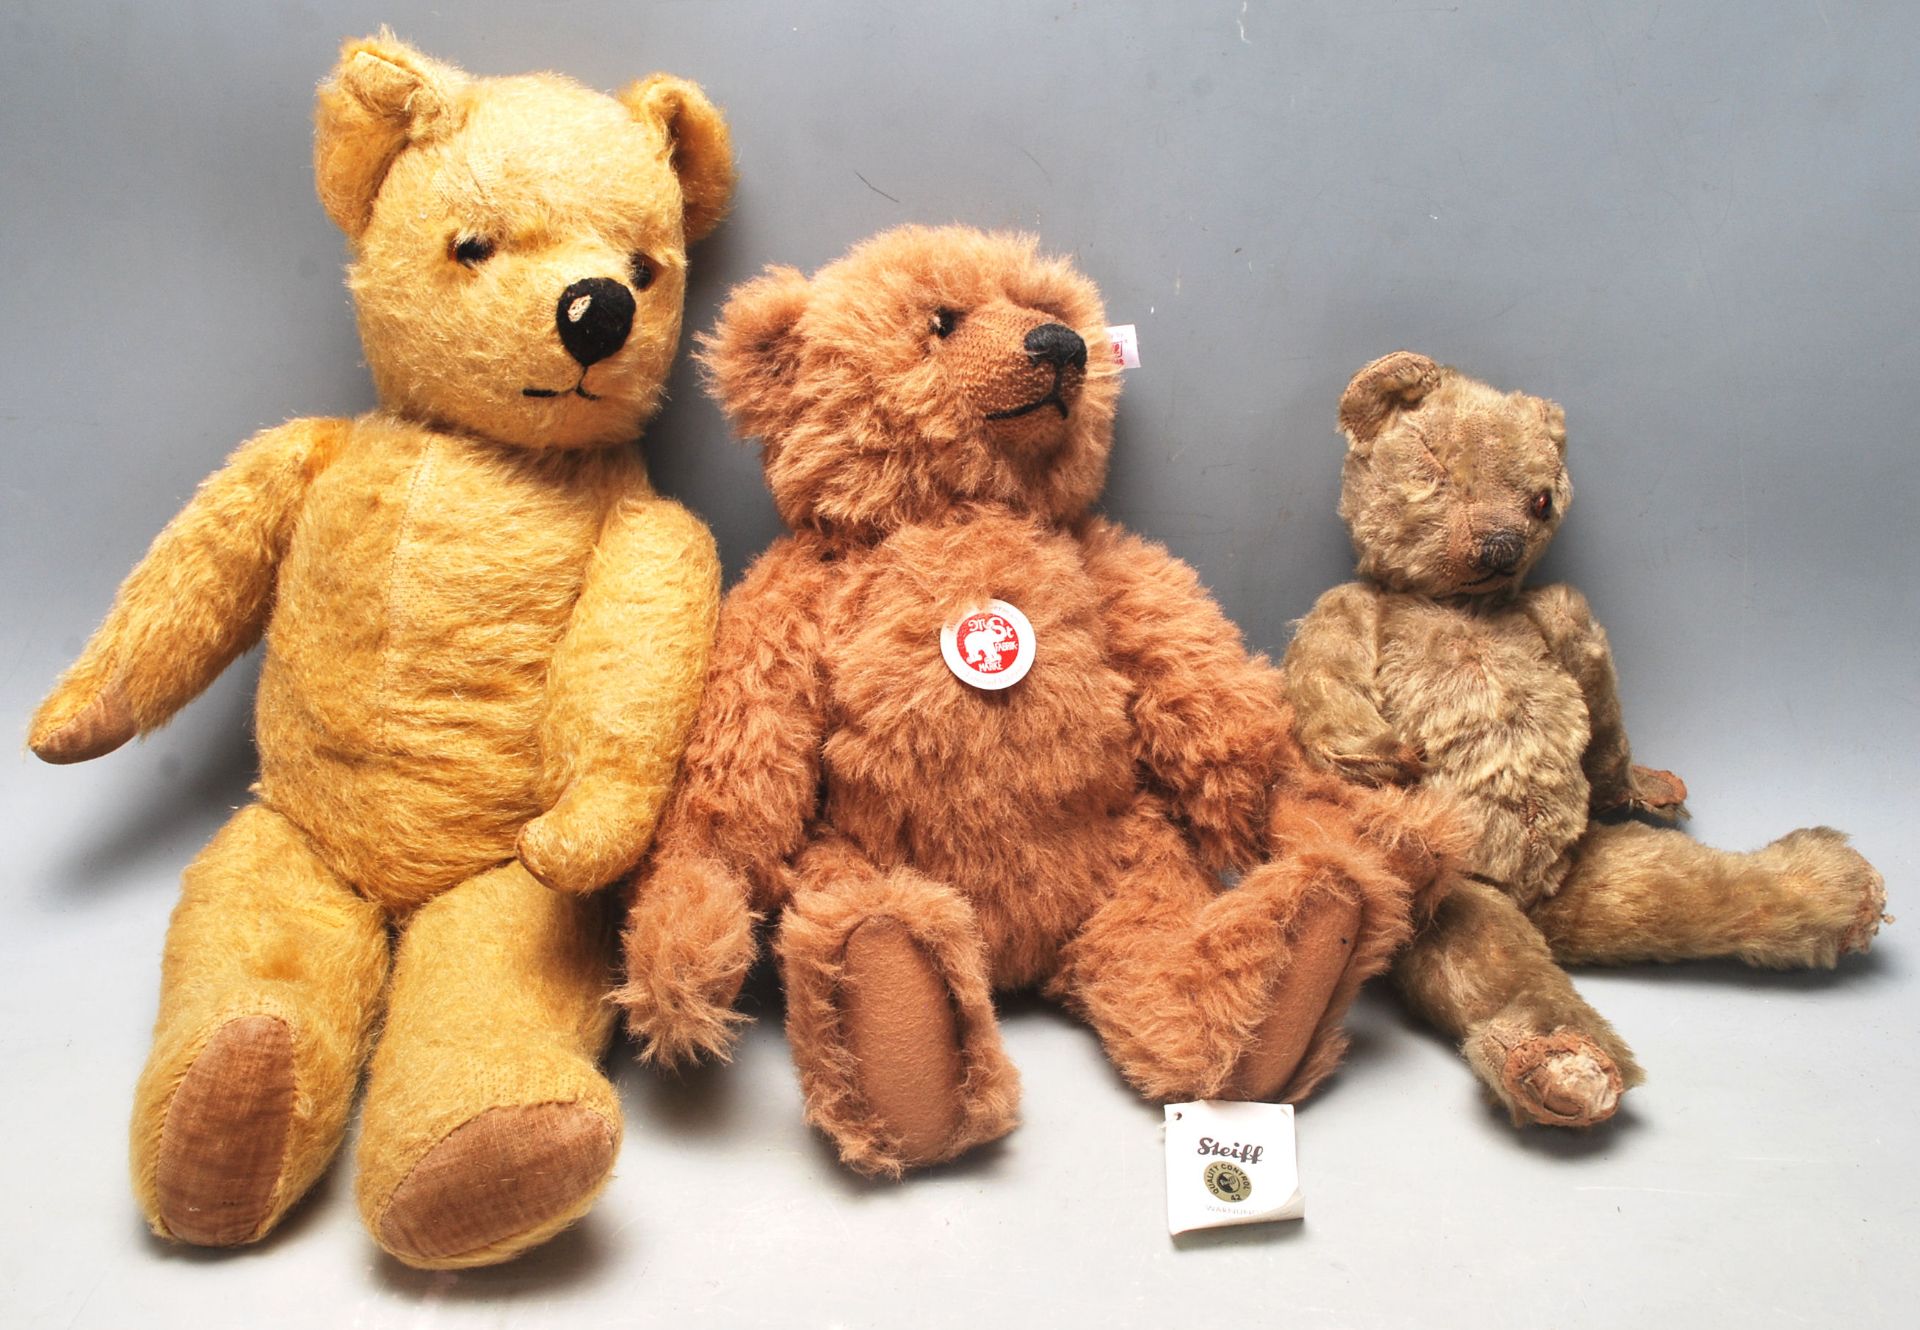 THREE RETRO 20TH CENTURY STUFFED TEDDY BEARS - SOFT TOYS